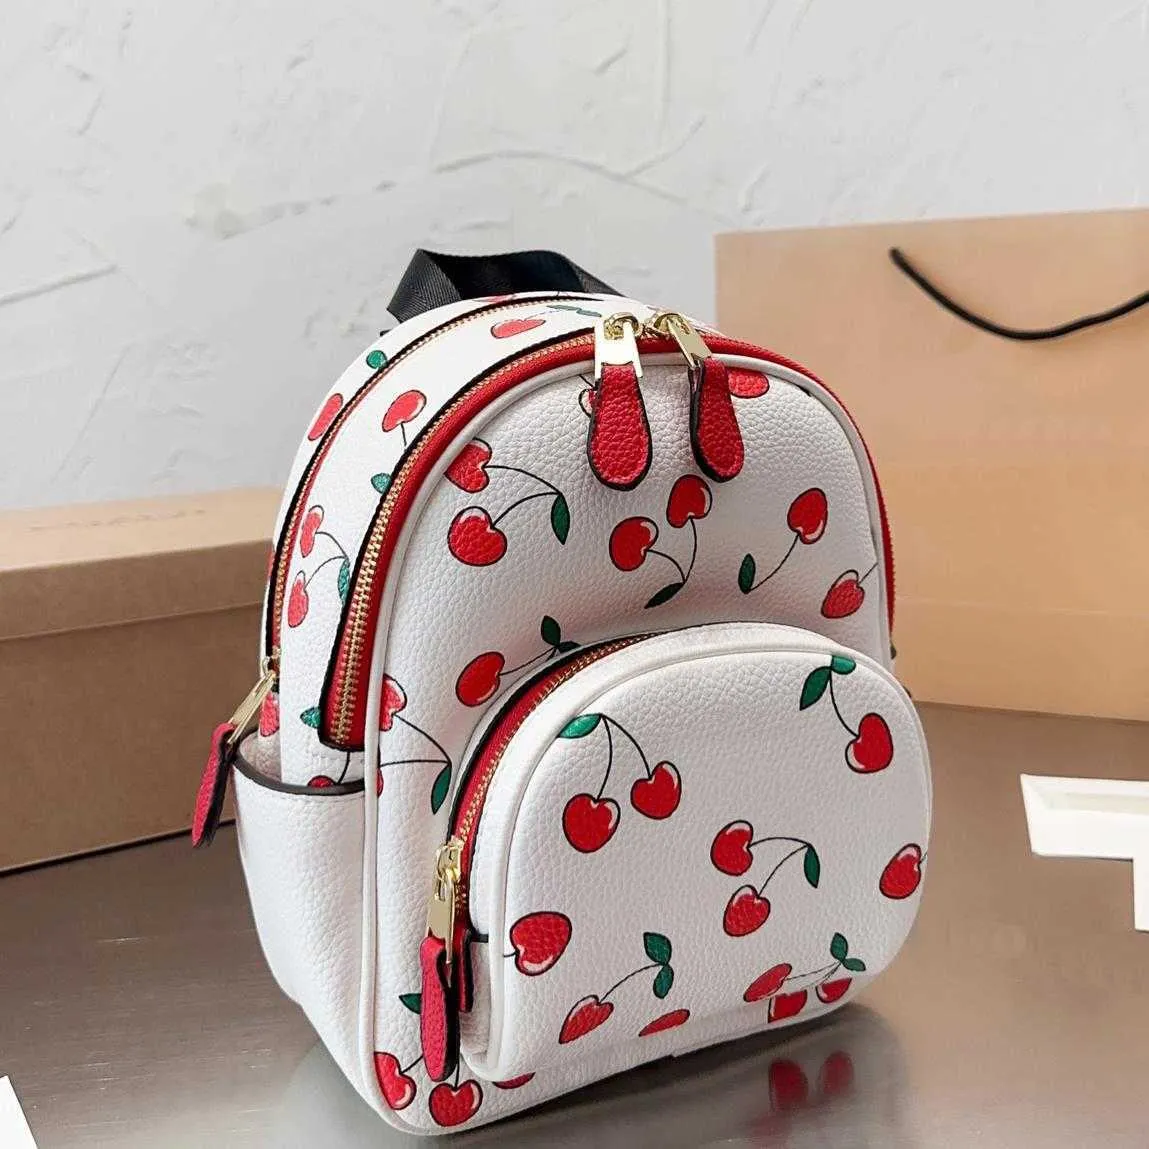 Top Cherry Print Bratchck Sacks C Letter Designer сумка роскошные рюкзаки Back Pack Bookbaged Женщины дизайнеры сумочка мод